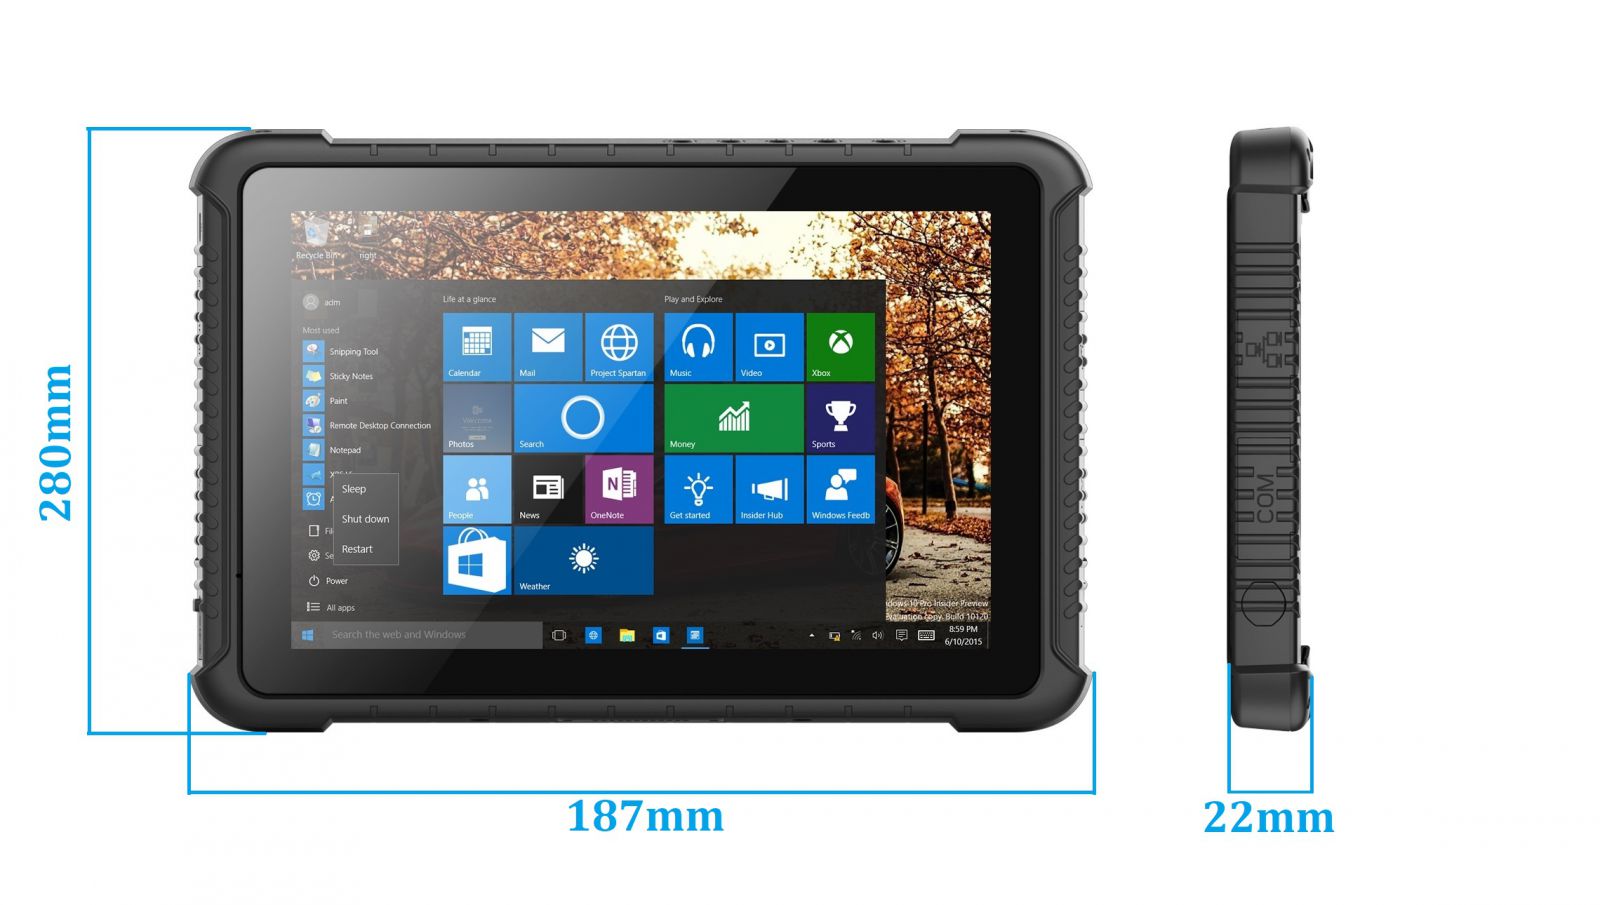 Emdoor I16K v.7 - Waterproof 10 inch tablet with Honeywell 2D barcode reader, IP65 + MIL-STD-810G, 4GB RAM, 128GB ROM, BT4.2 and Windows 10 PRO 